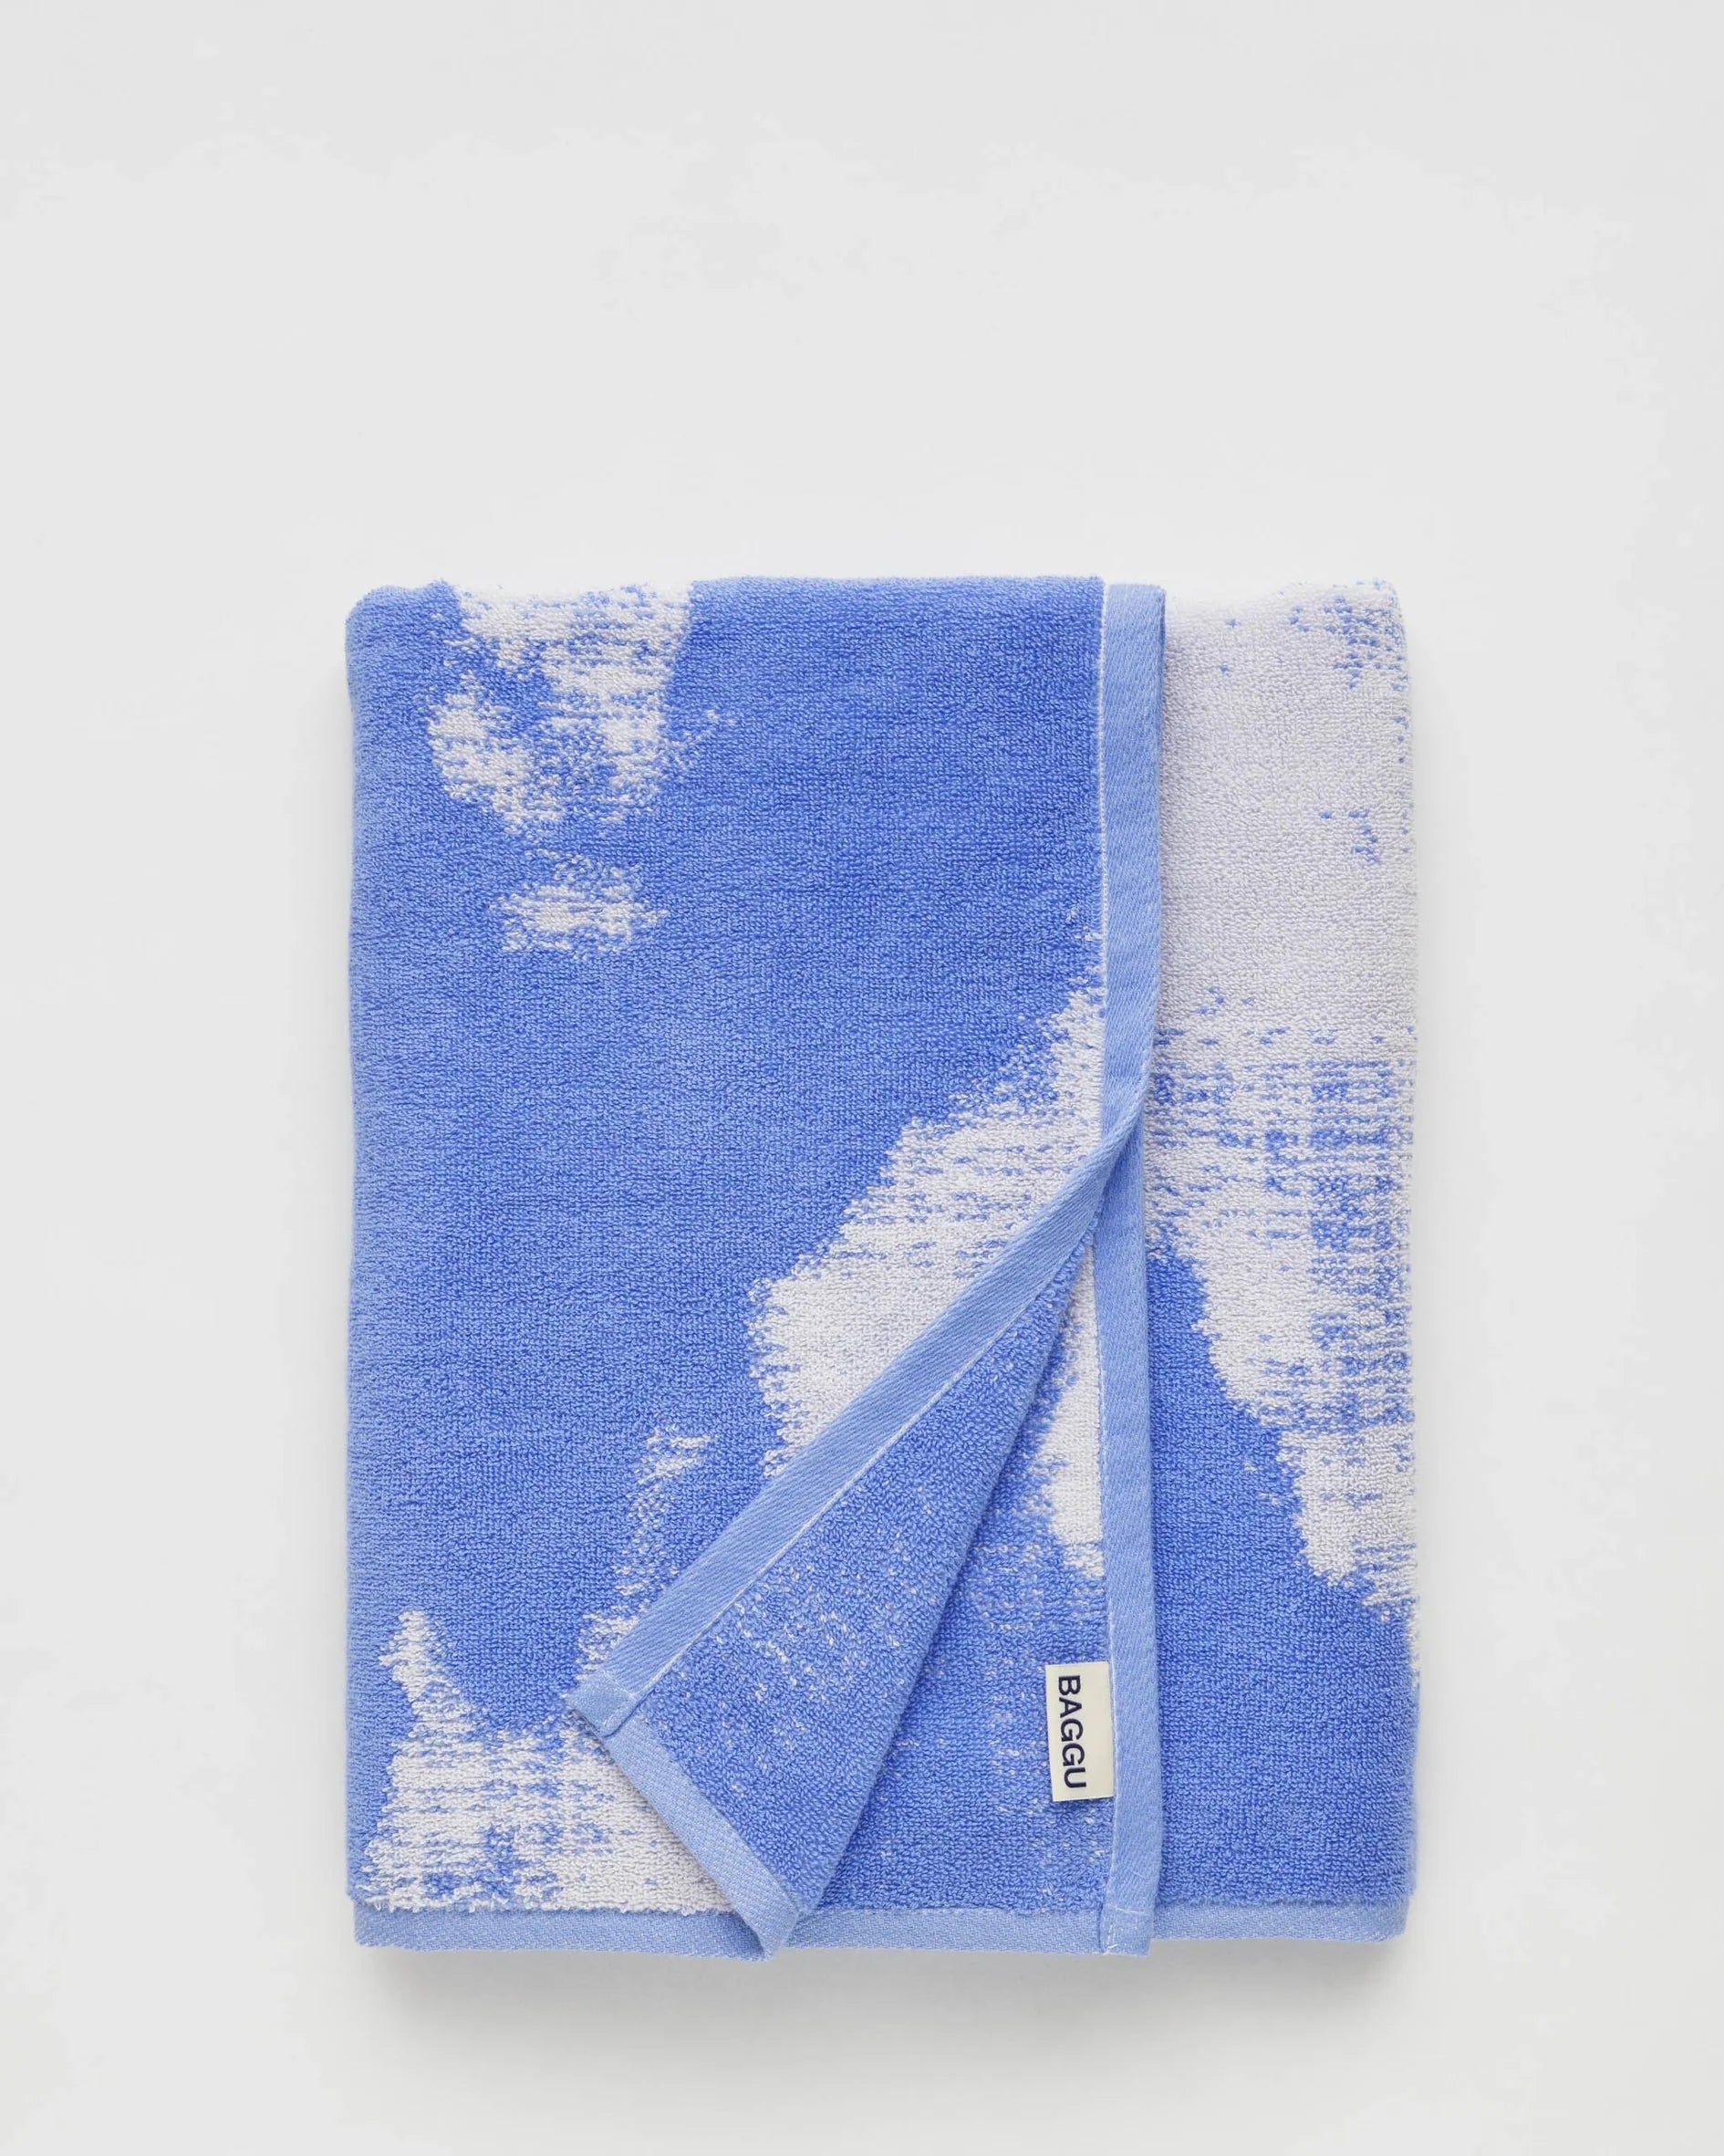 baggu bath towel in blue and white cloud pattern